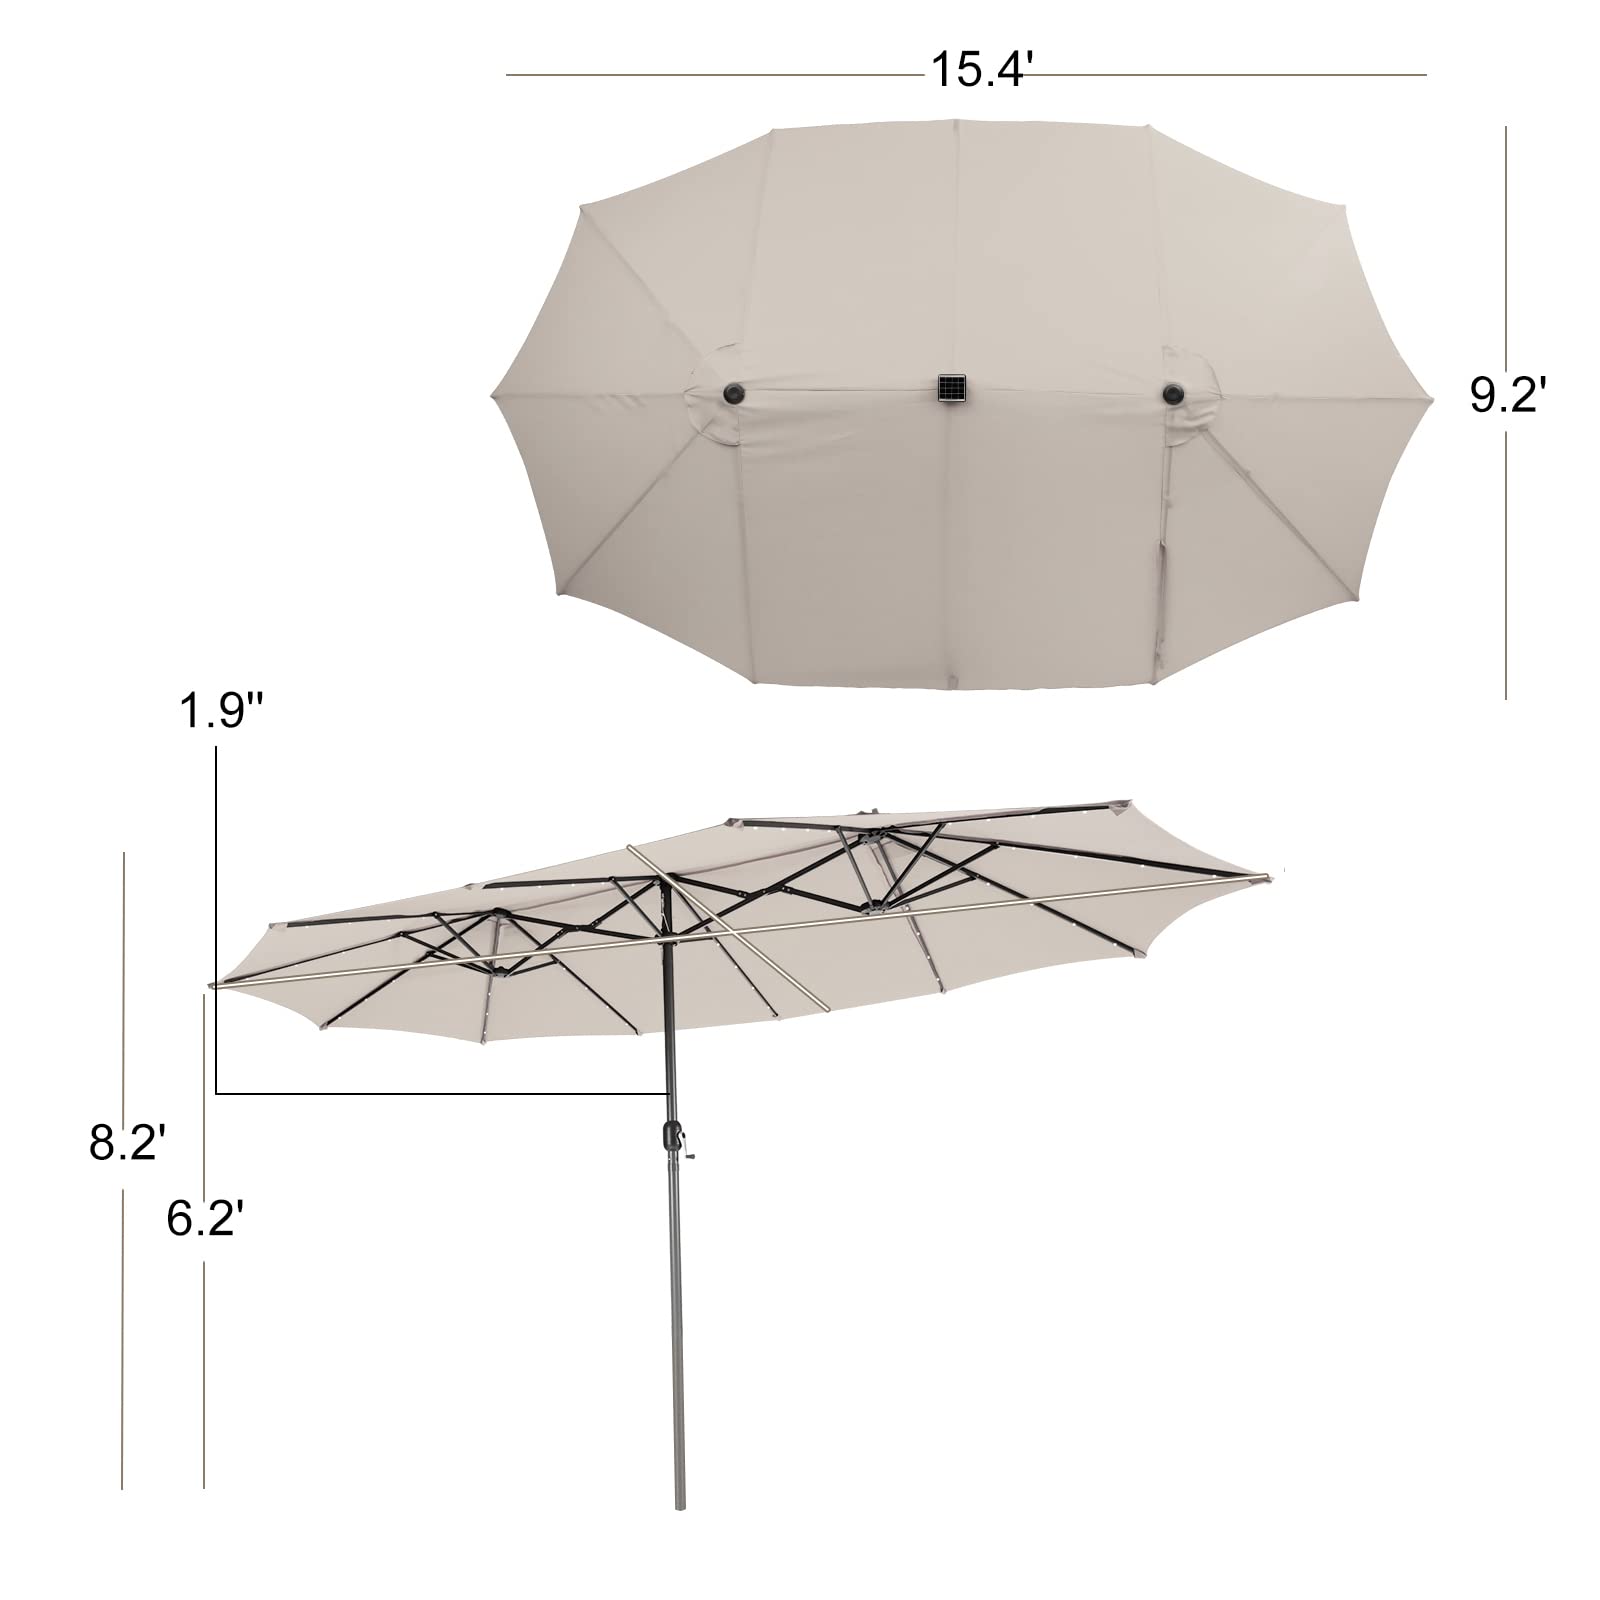 Giantex 15 FT Double Patio Umbrellas with 48 Solar LED Lights, Extra-Large Rectangle Umbrella